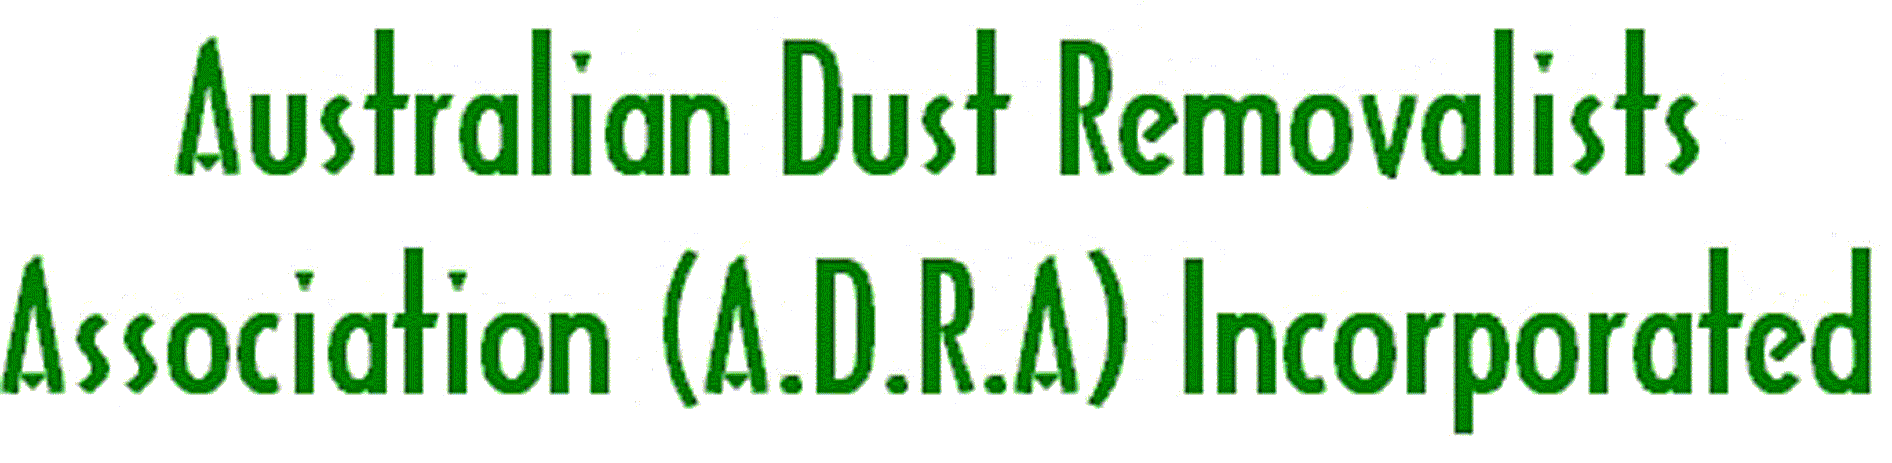 ADRA (Australian Dust Removalists Association) Incorporated